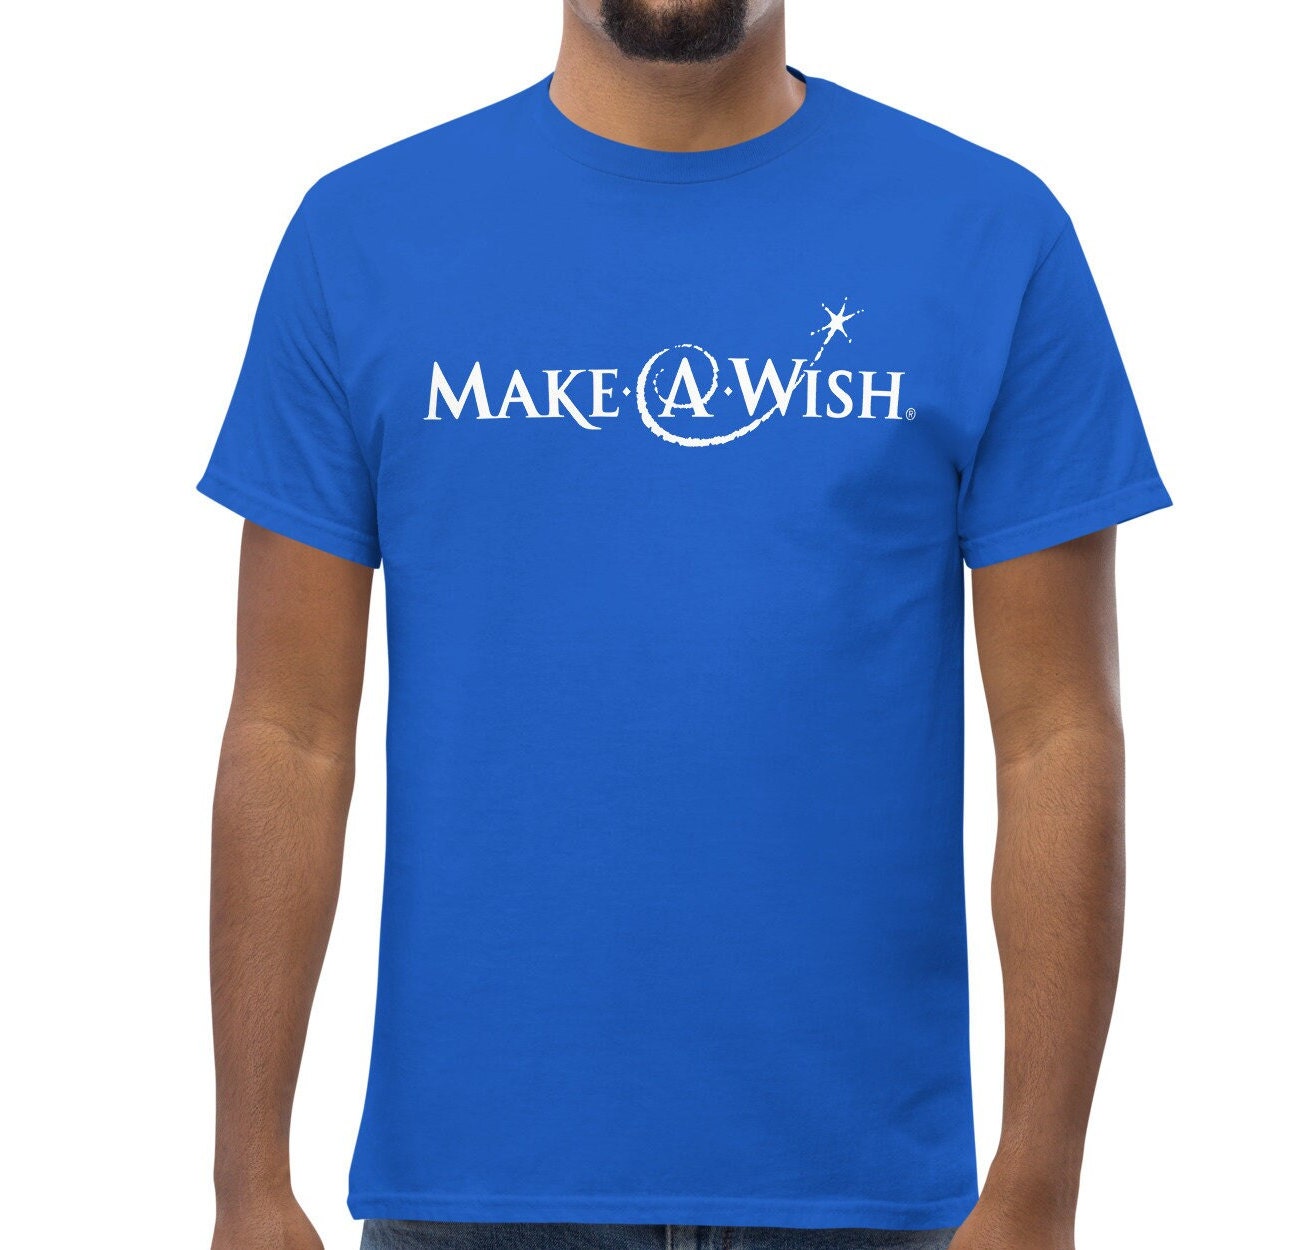 Make-a-wish, Make a Wish Foundation T-shirt, Charity Support Tee, Gift Shirt,  Philanthropy Awareness, Inspirational Clothing Unisex T Shirt -  Canada